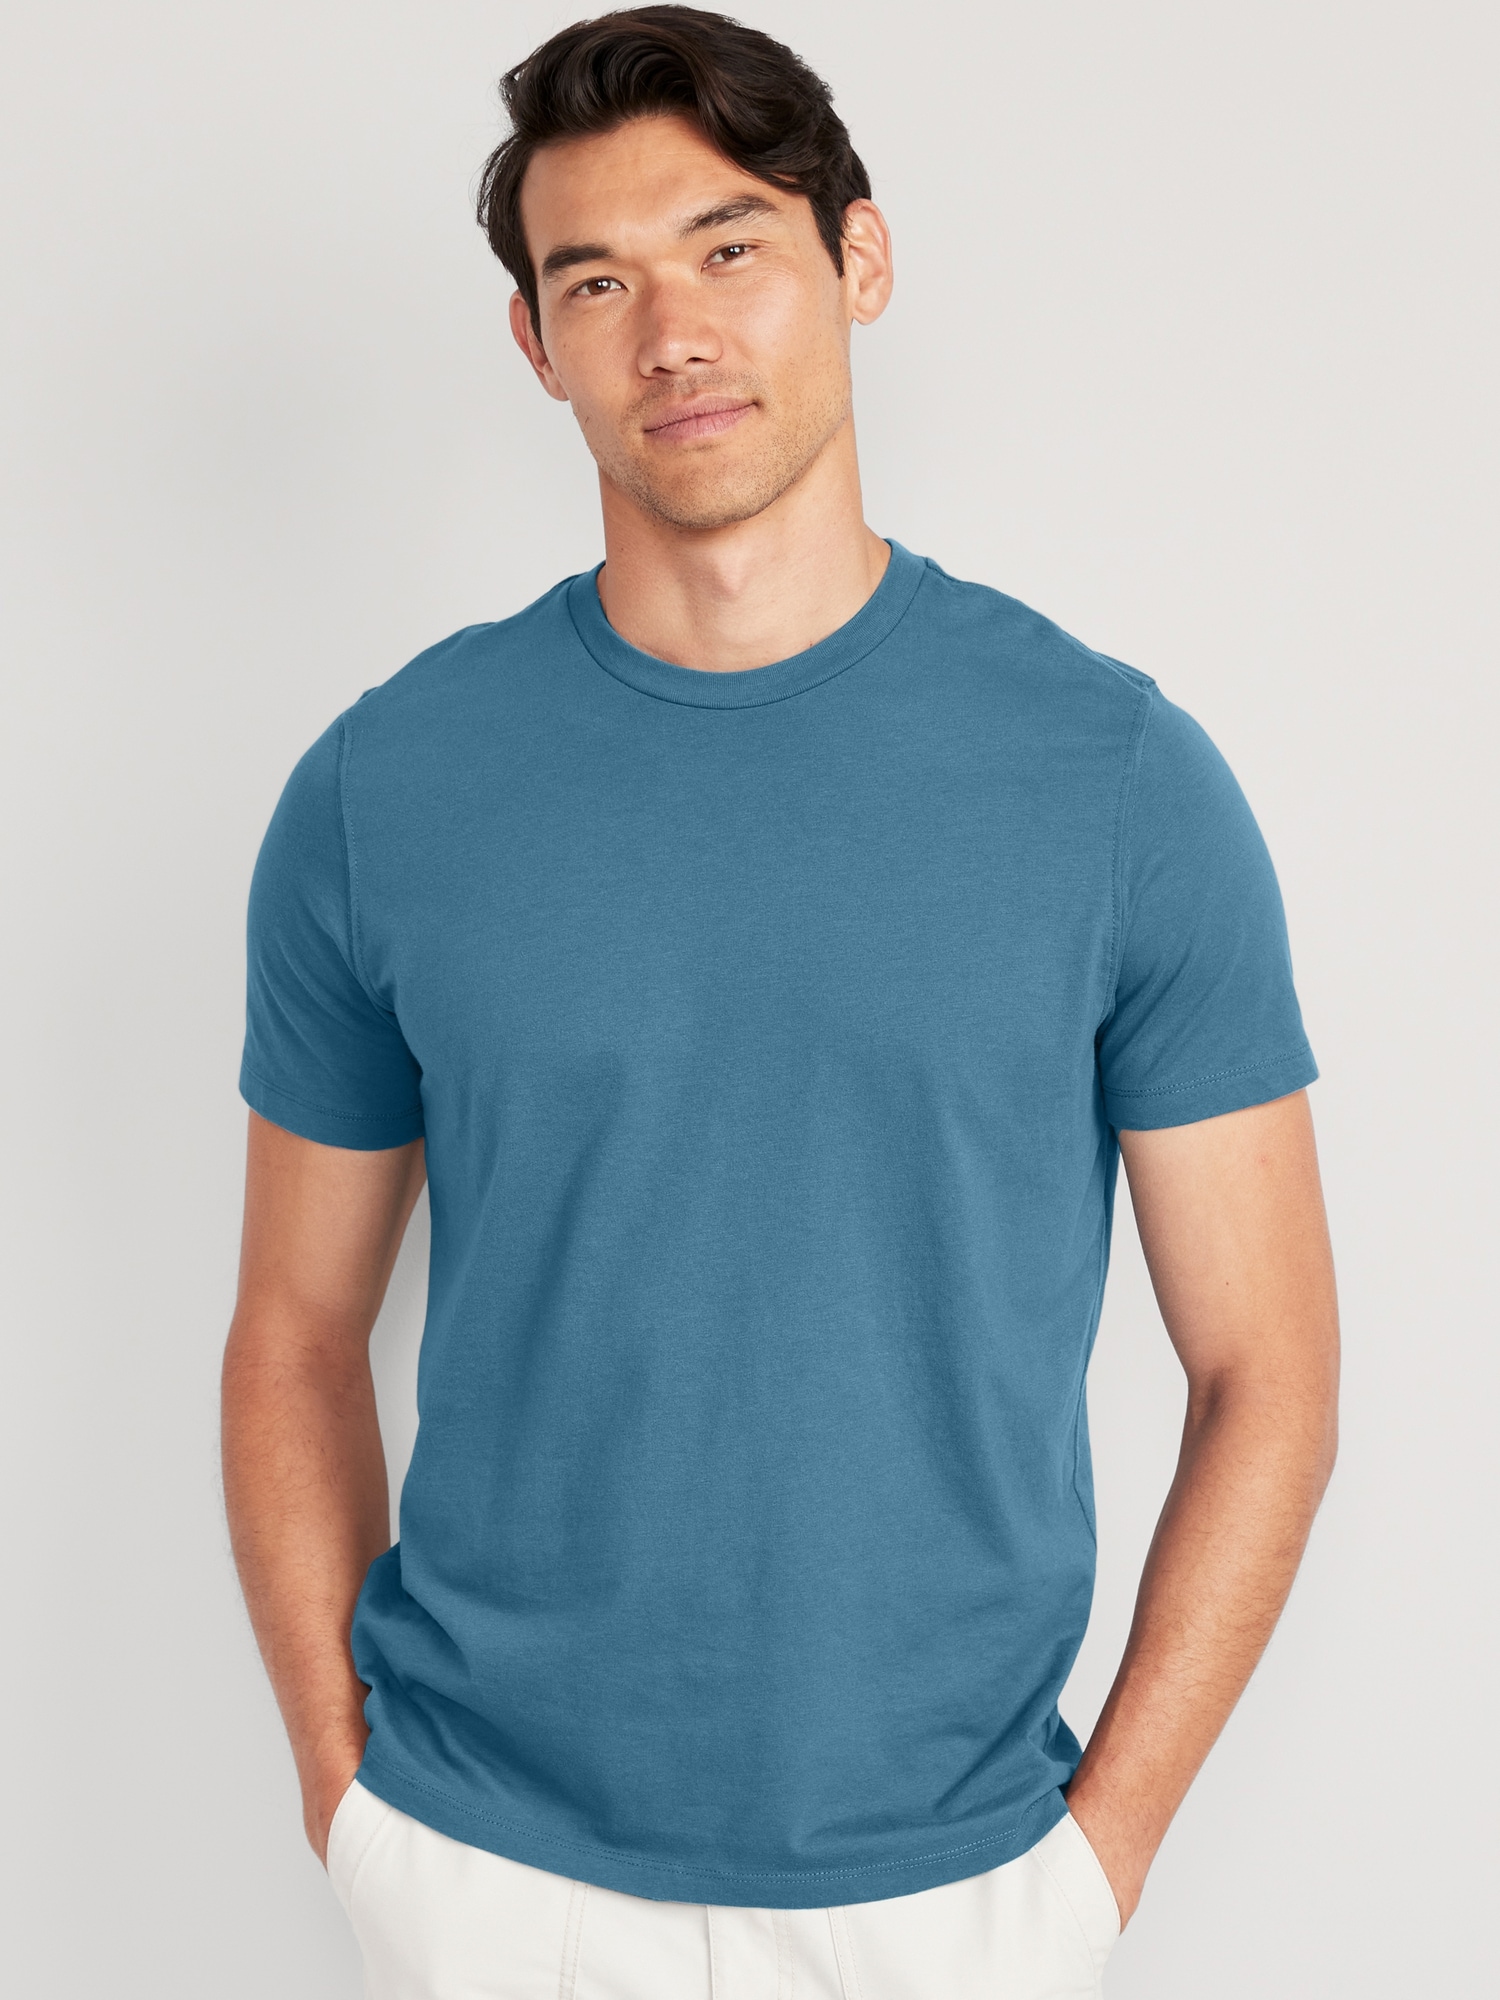 Old Navy Soft-Washed Crew-Neck T-Shirt for Men blue. 1